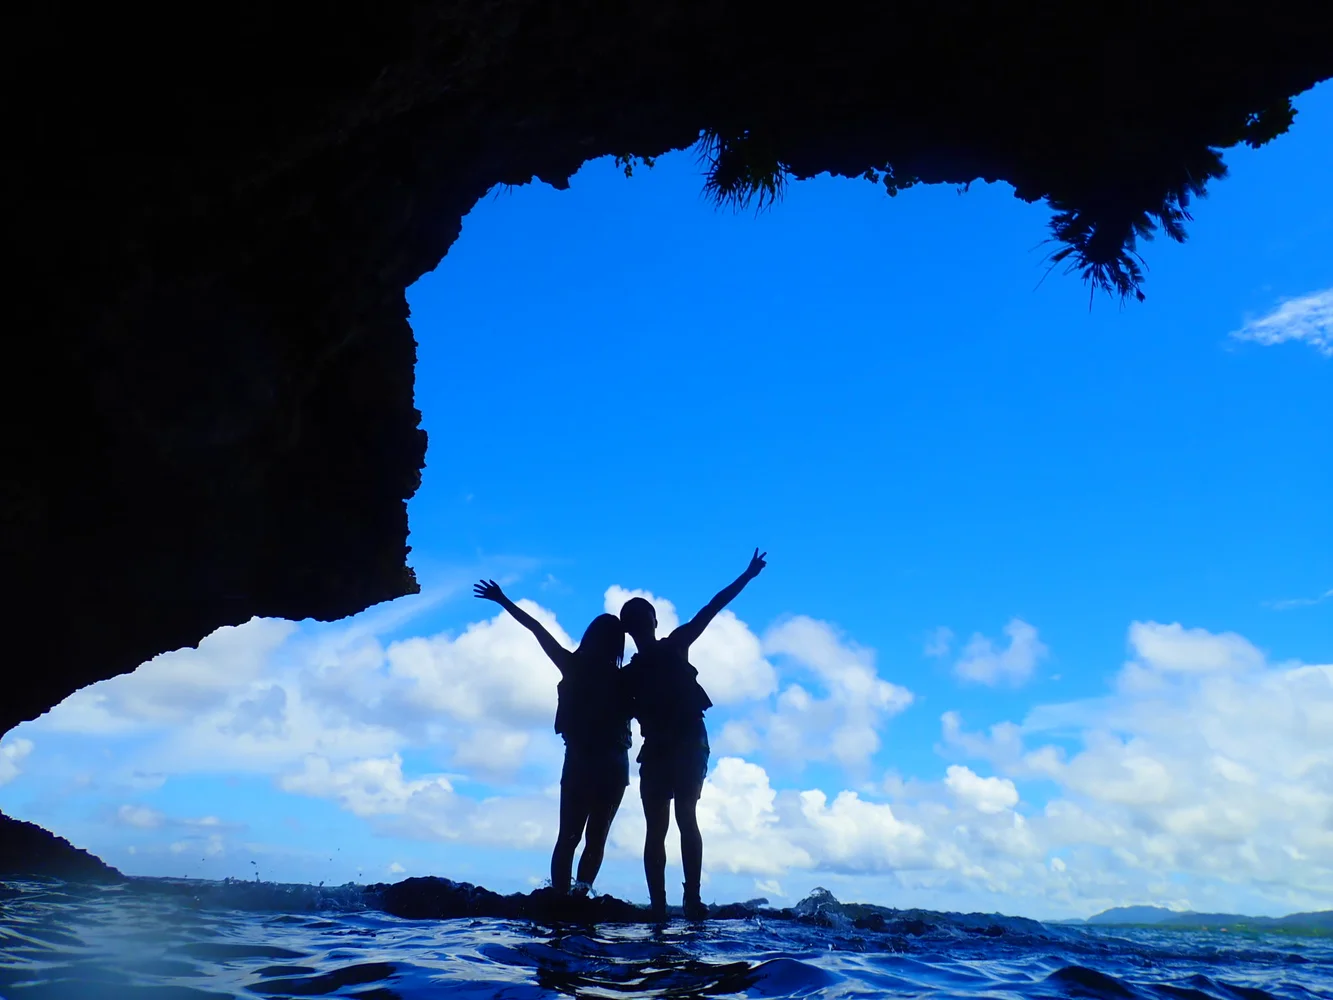 Ishigaki Blue Cave & Hamajima Snorkeling Tour in Okinawa